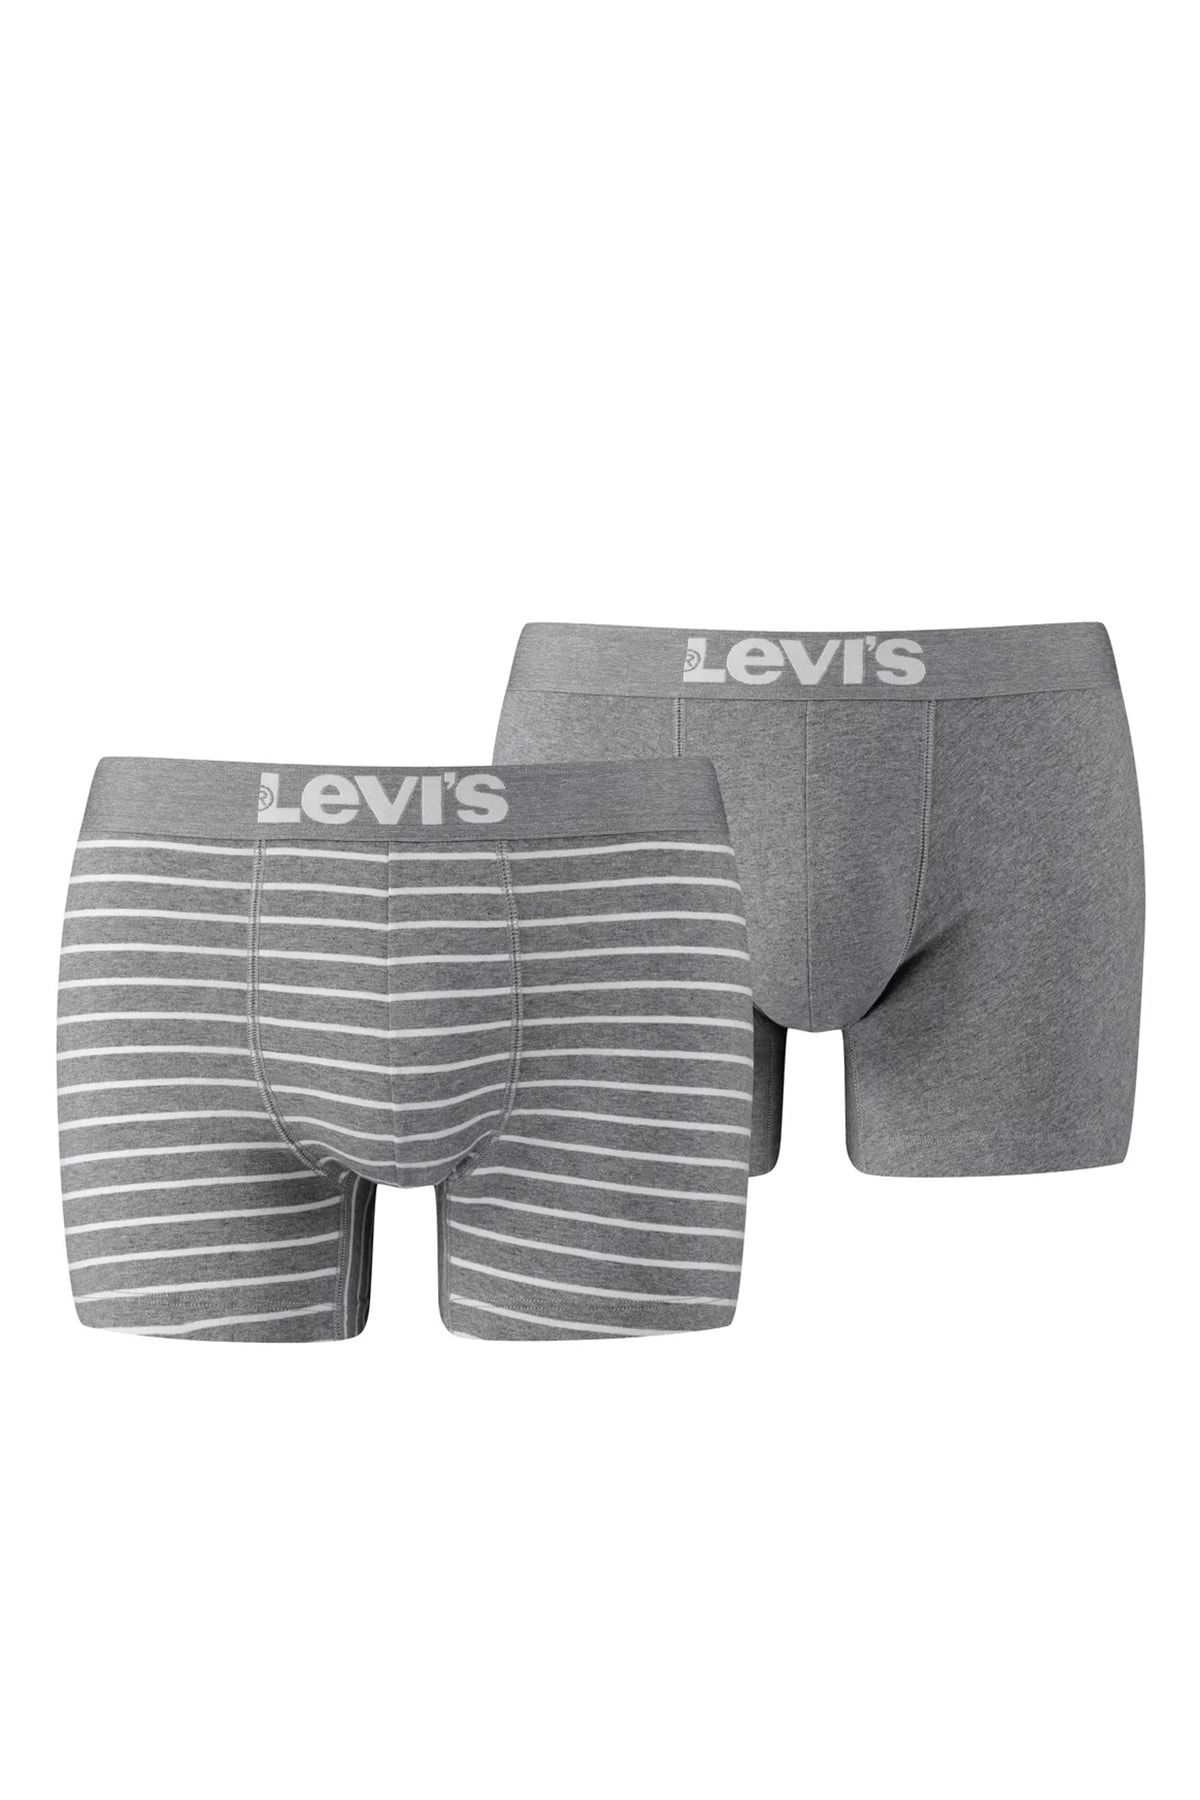 Levi's ® Men Vintage Stripe Boxer